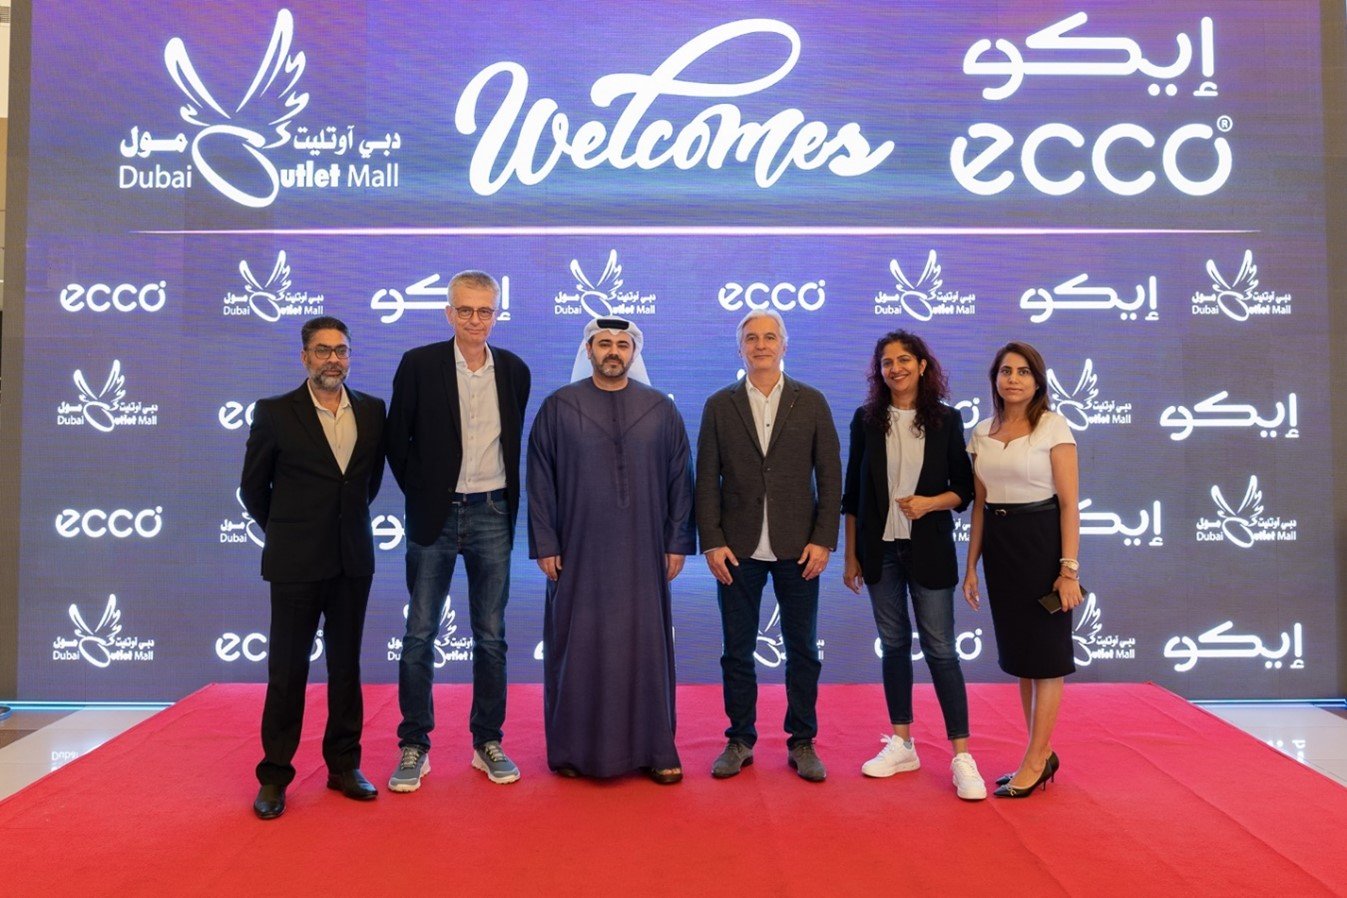 ECCO to open a location in Dubai Outlet